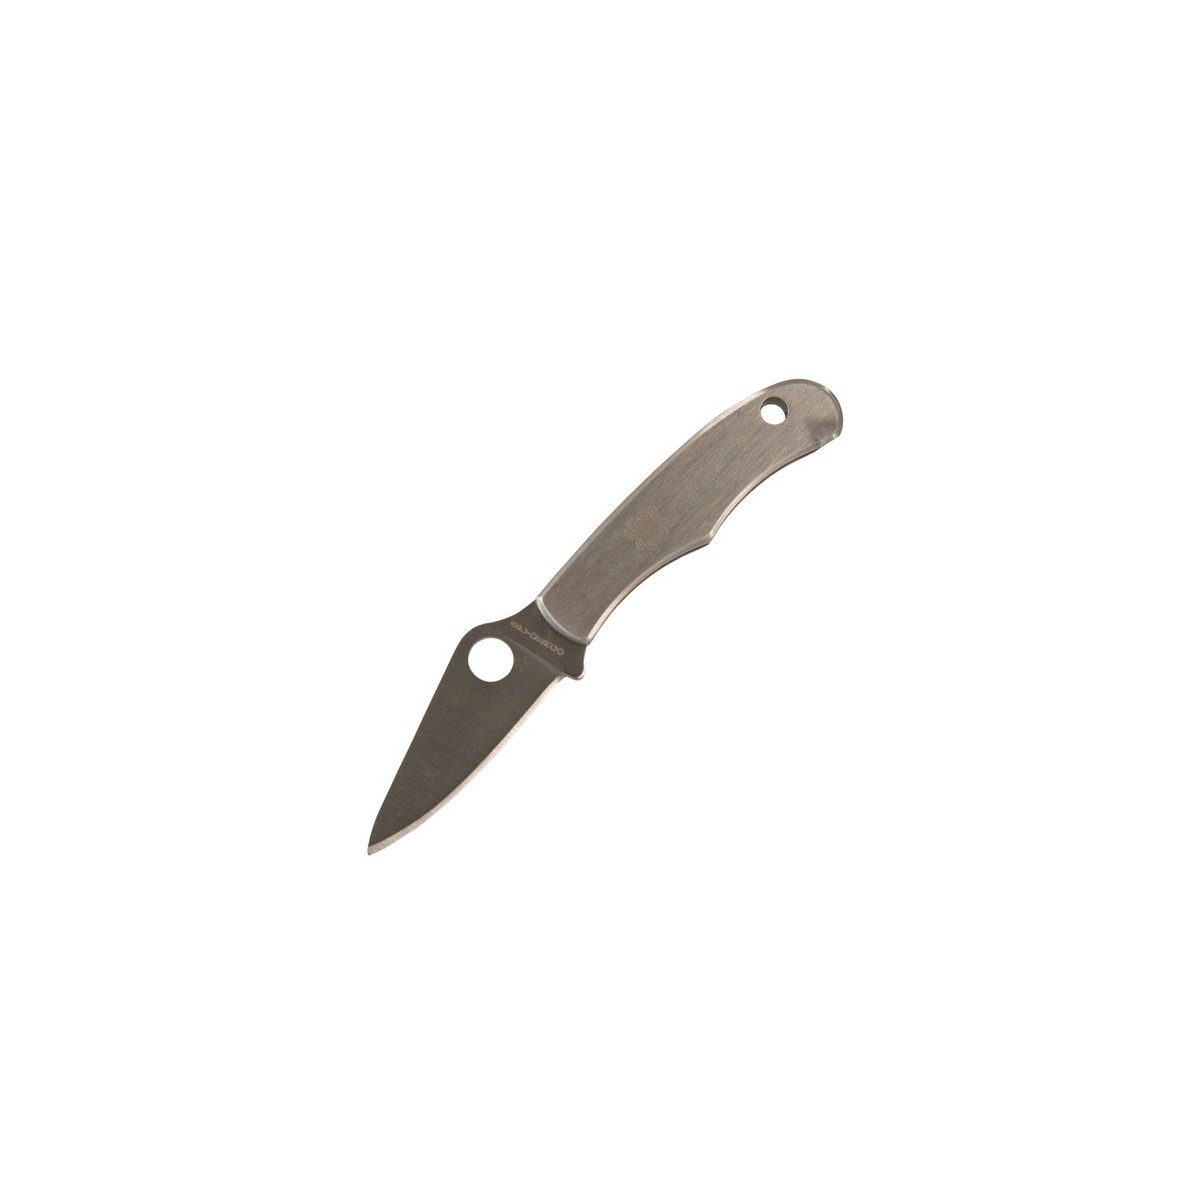 Bug Knife, Stainless Steel Handle, Plain